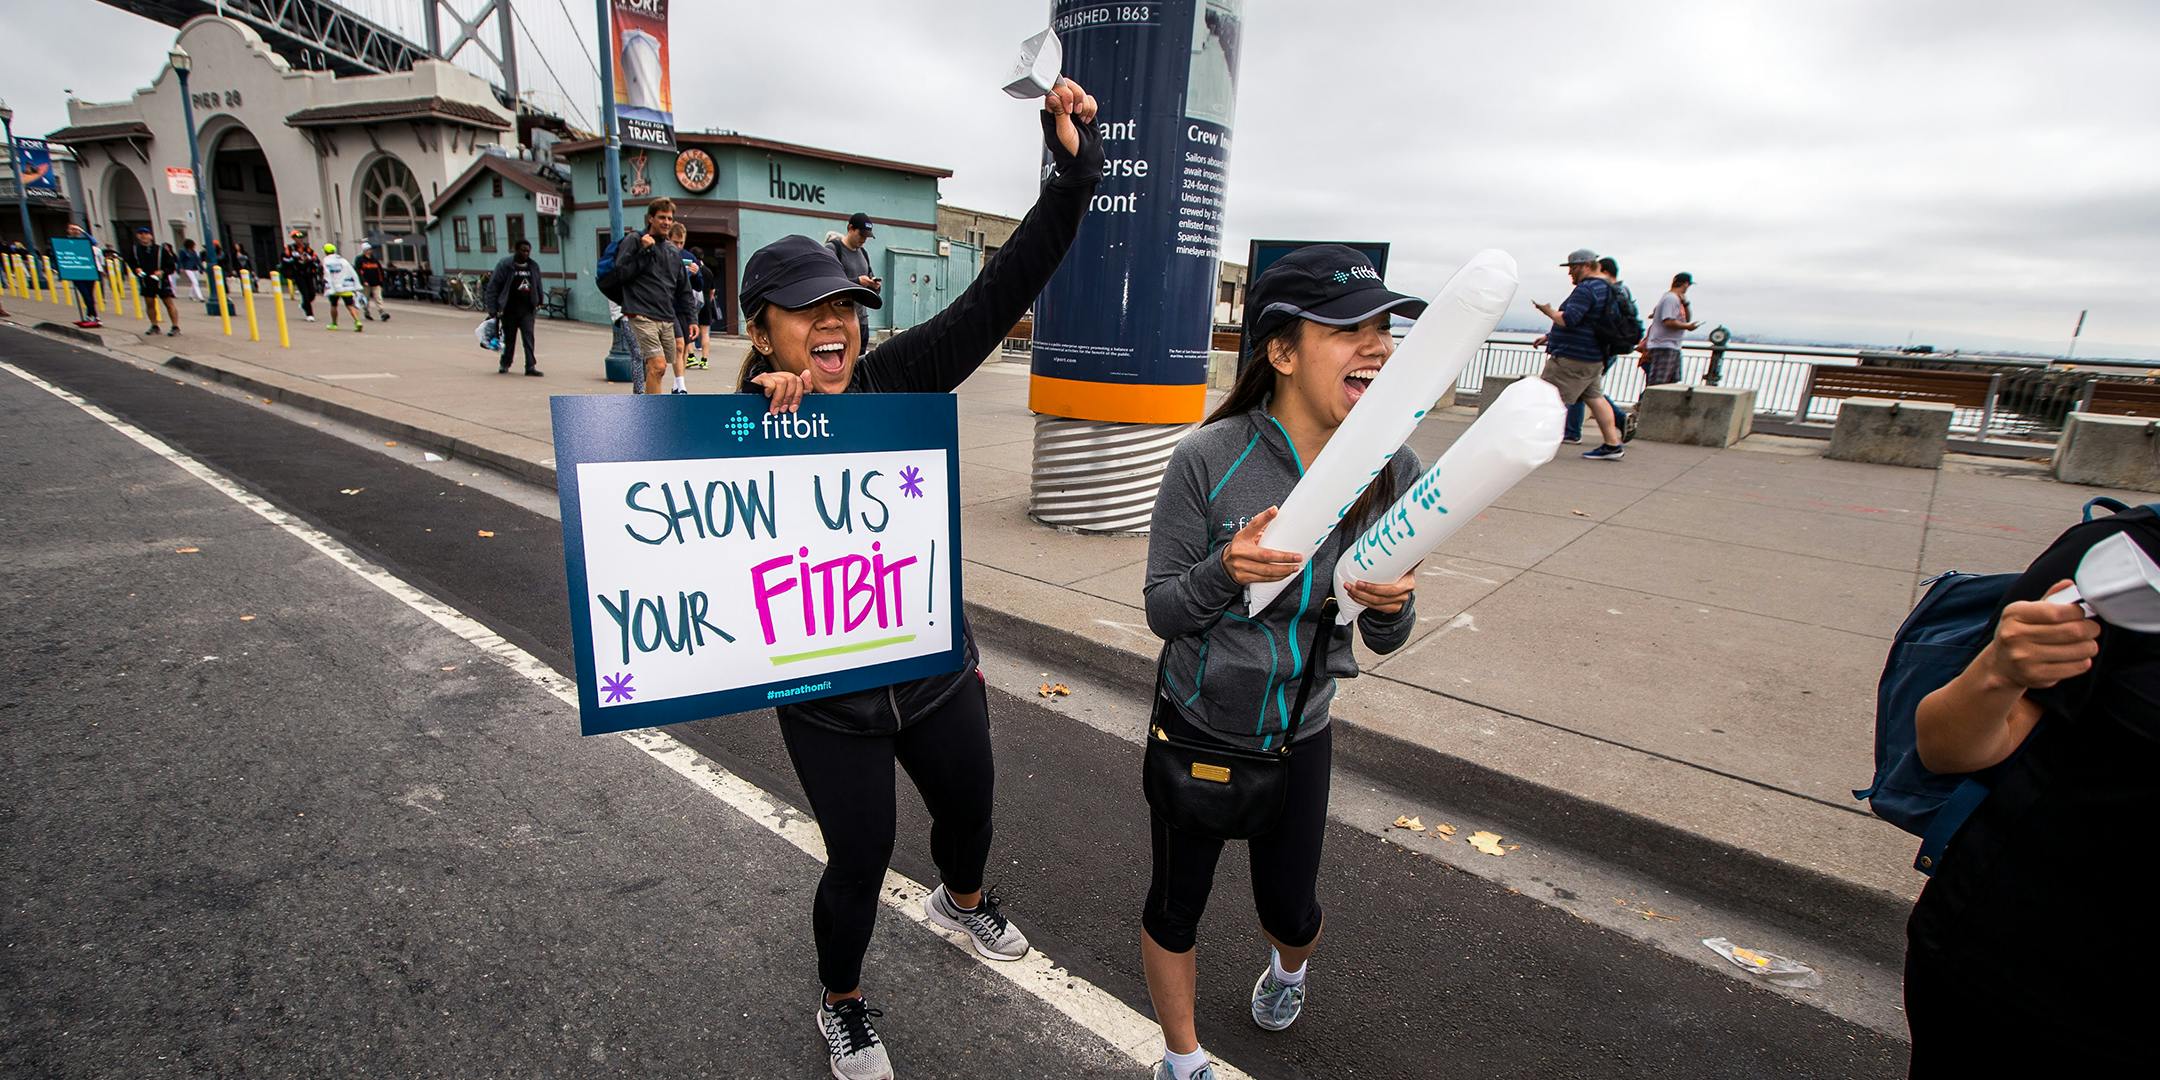 Fitbit's Cheer Mile at the San Francisco Marathon